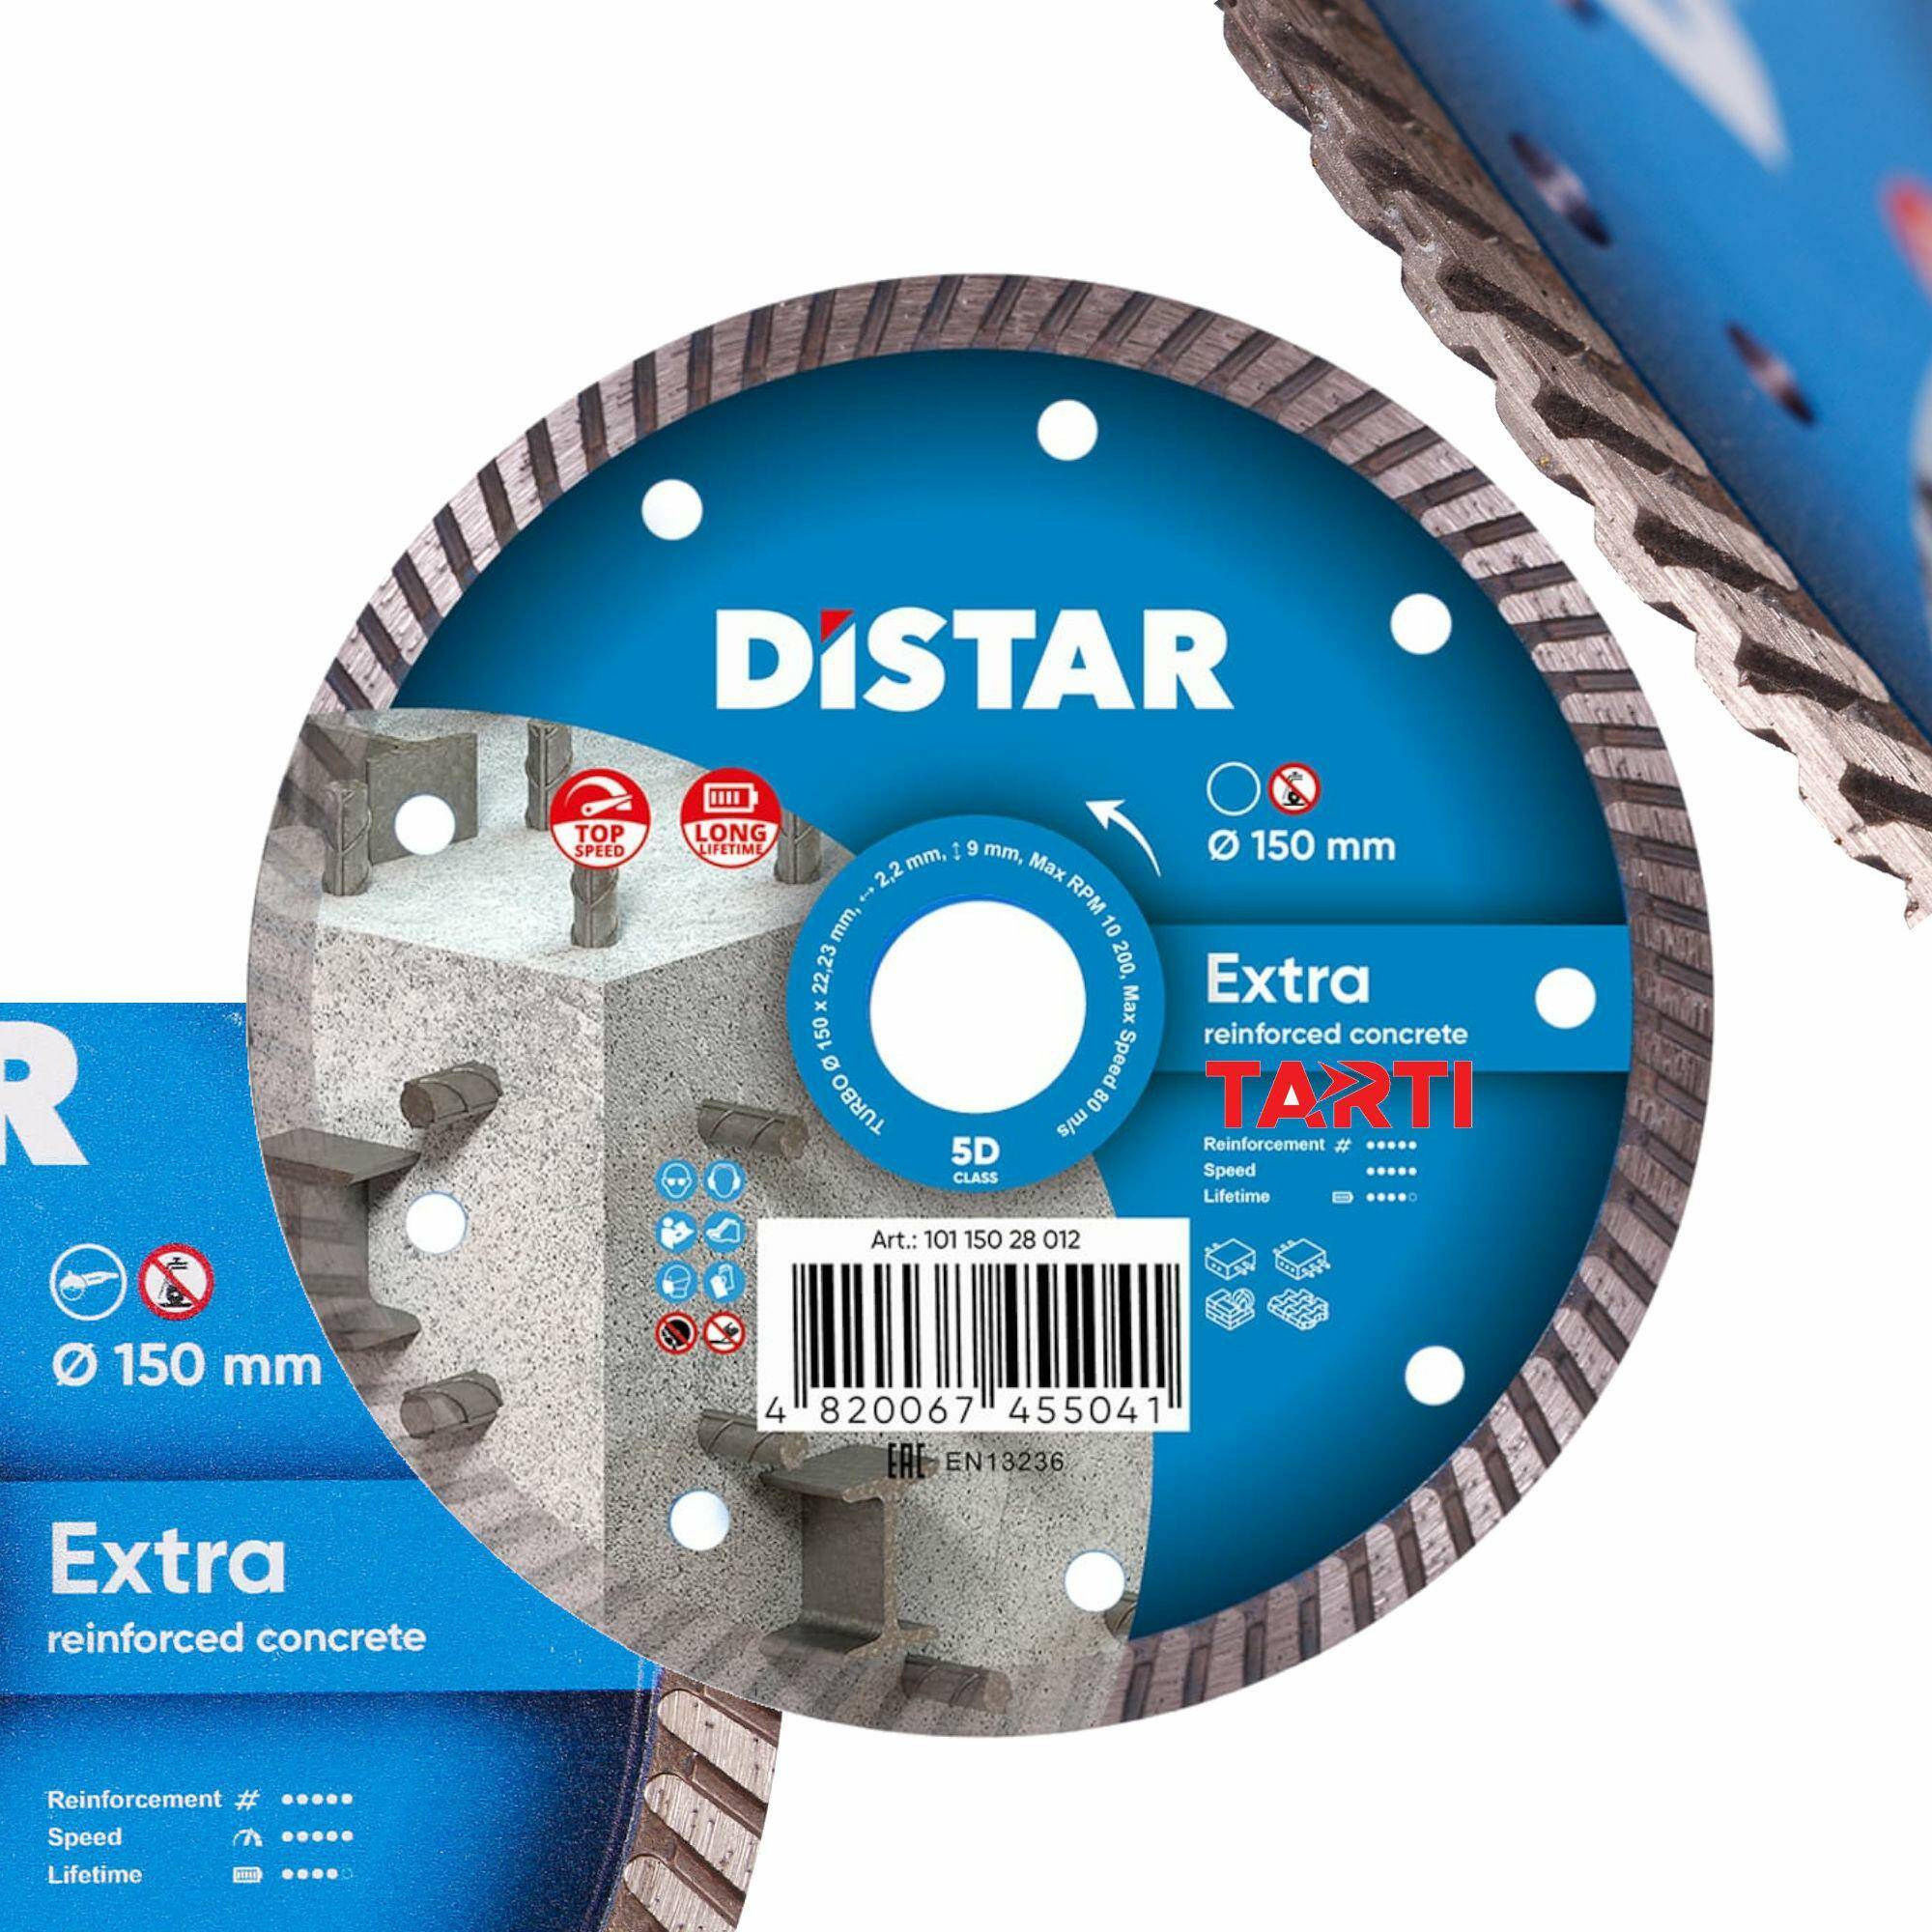 DISTAR 150 Turbo Extra